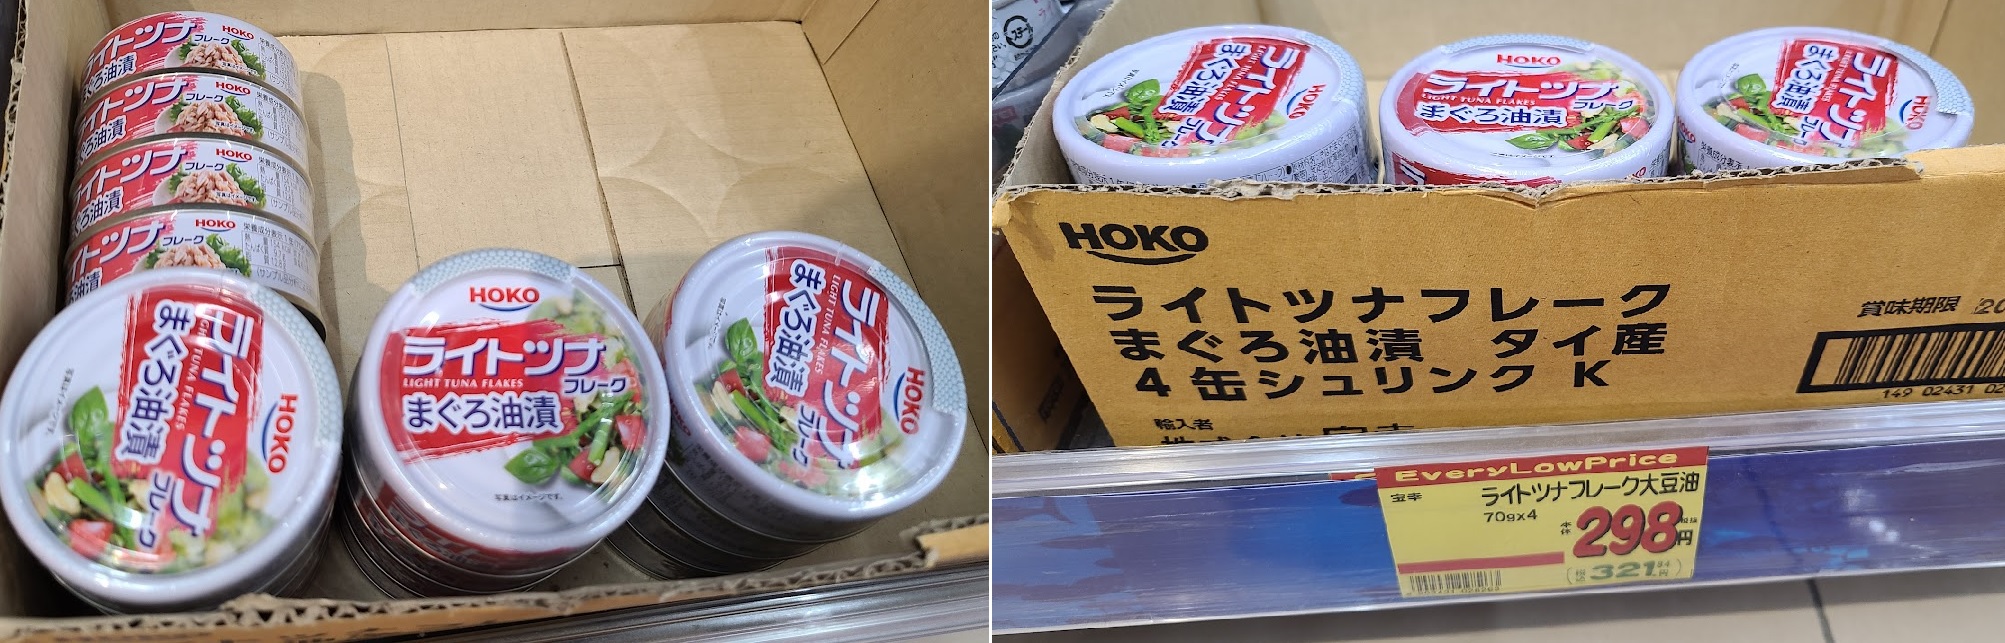 HOKOツナ缶４つで298円